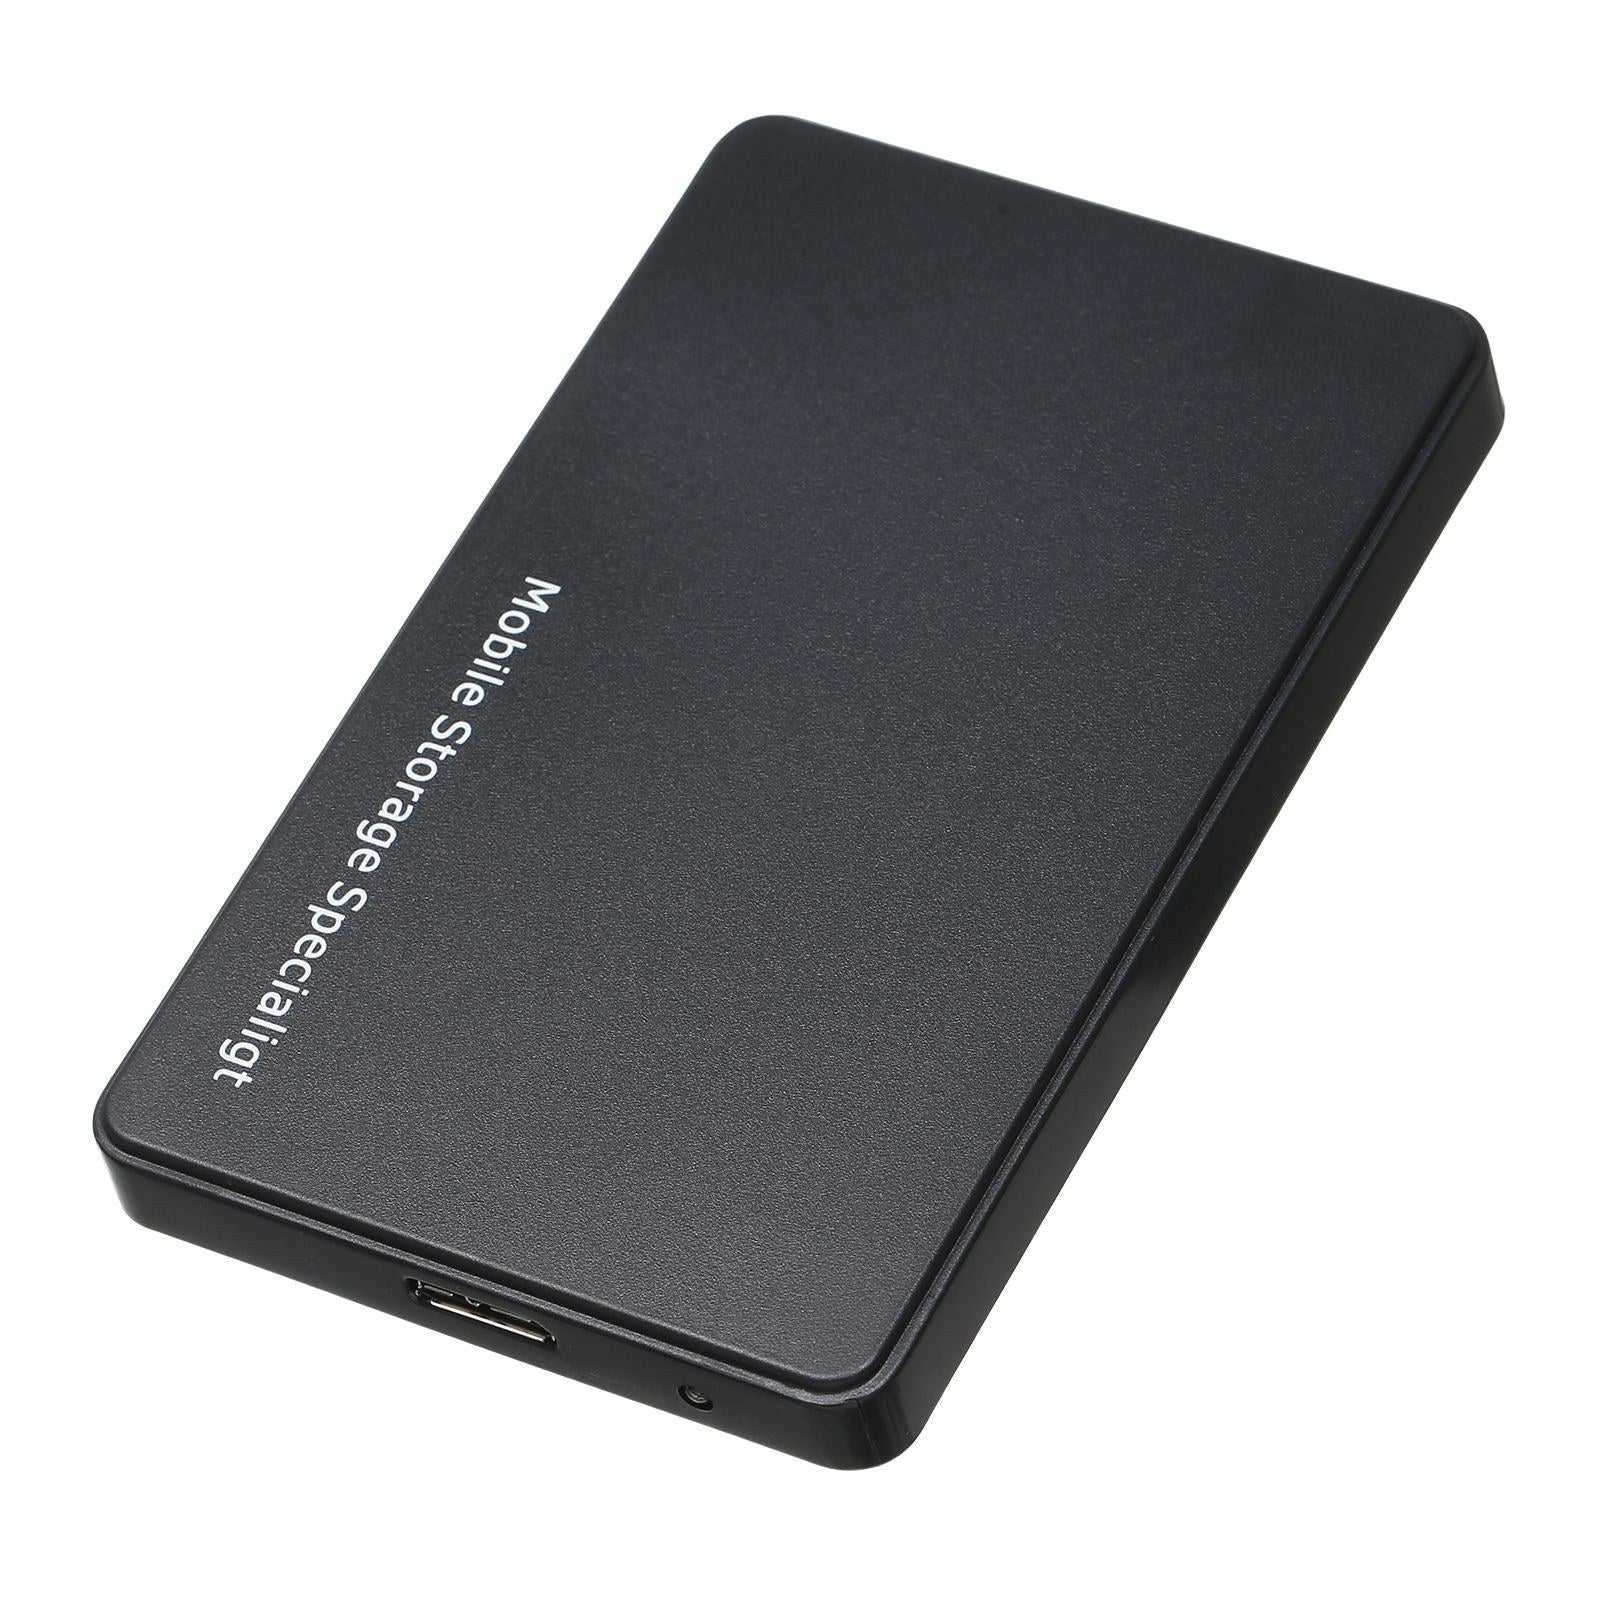 2.5 inch Hard Disk Case USB3.0 High-speed 5Gpbs Transmission External Enclosure SATA Hard Drive Case Support 2.5inch 7/9.5mm SATA HDD/SSD - Black